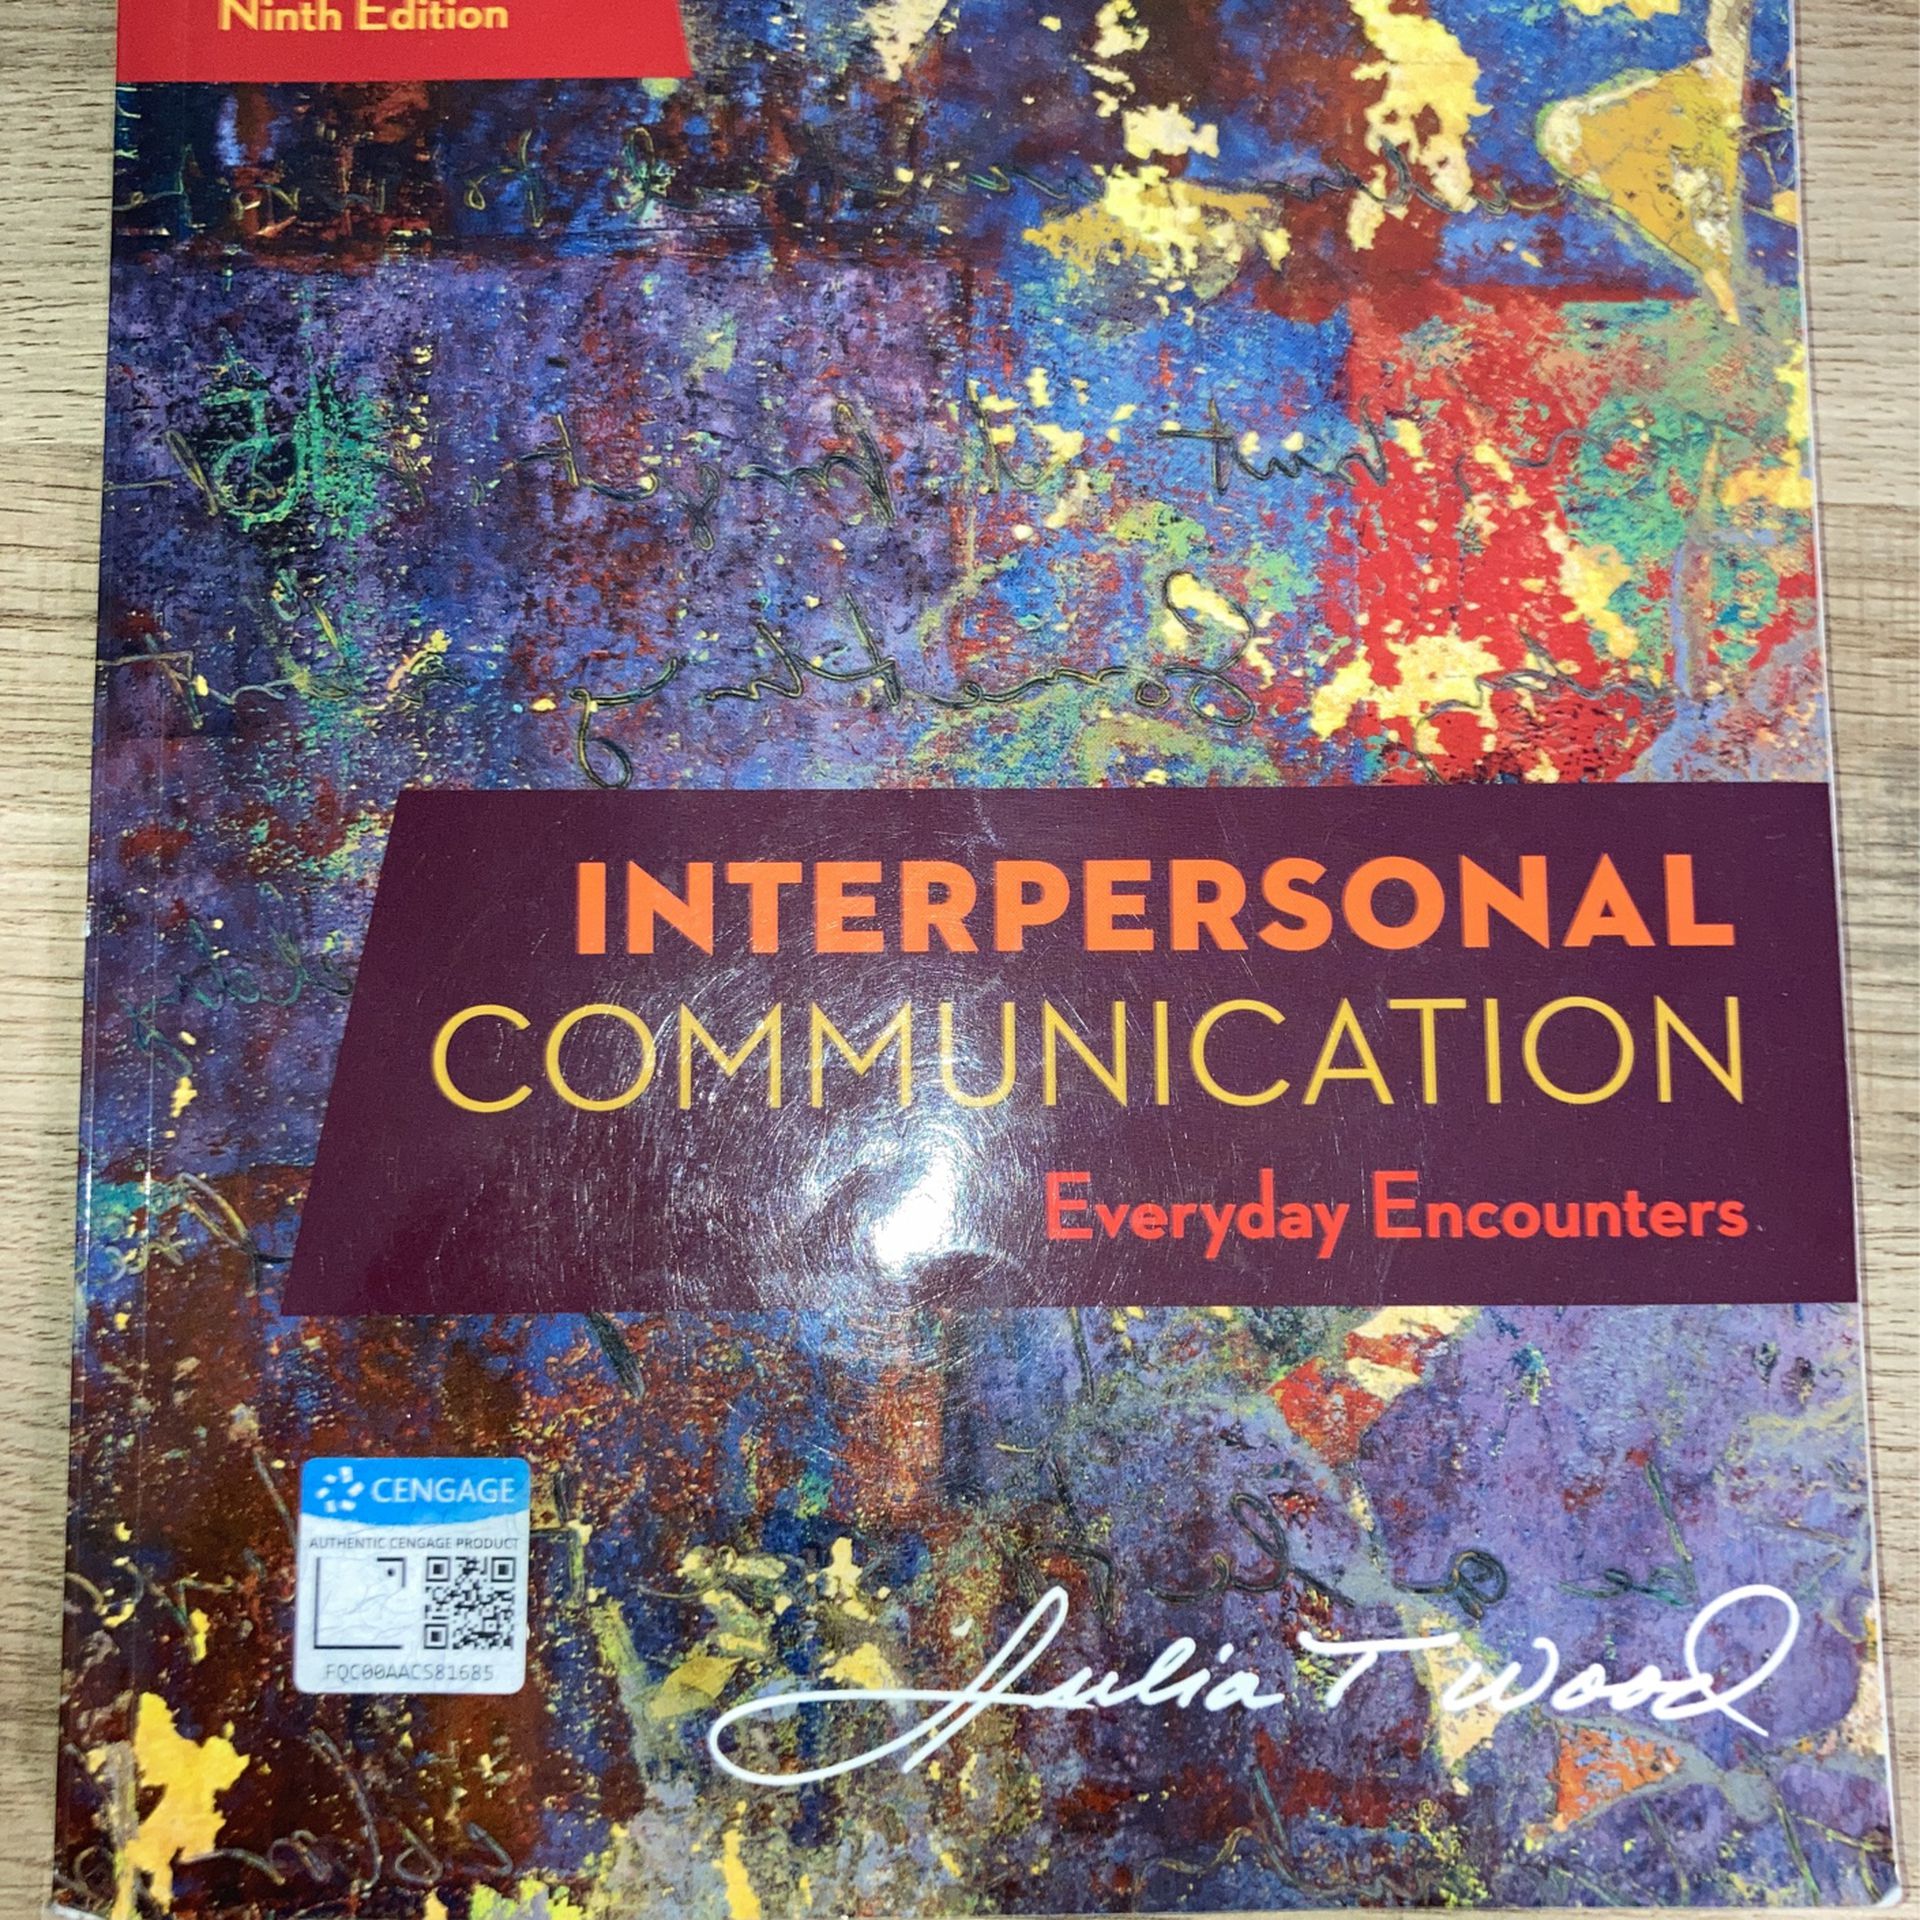 Interpersonal Communication Books